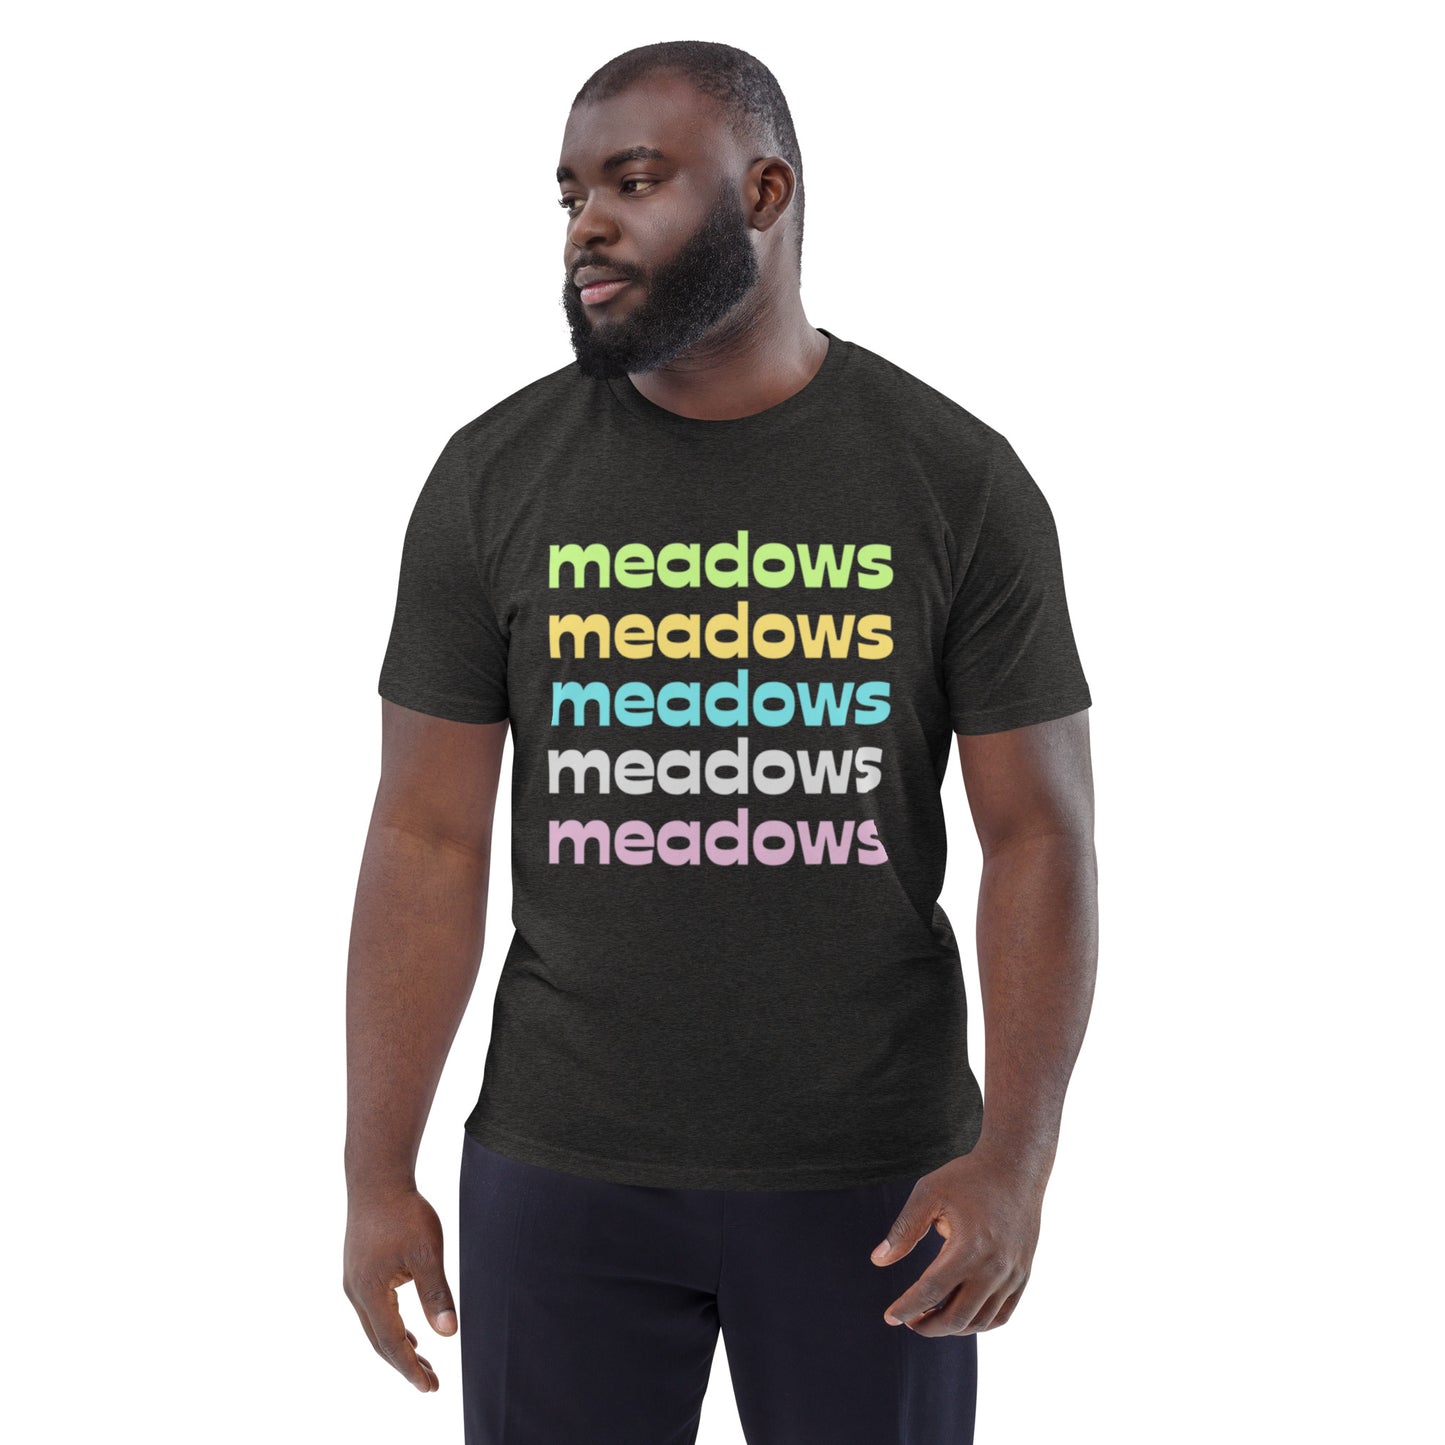 Meadows organic cotton t-shirt